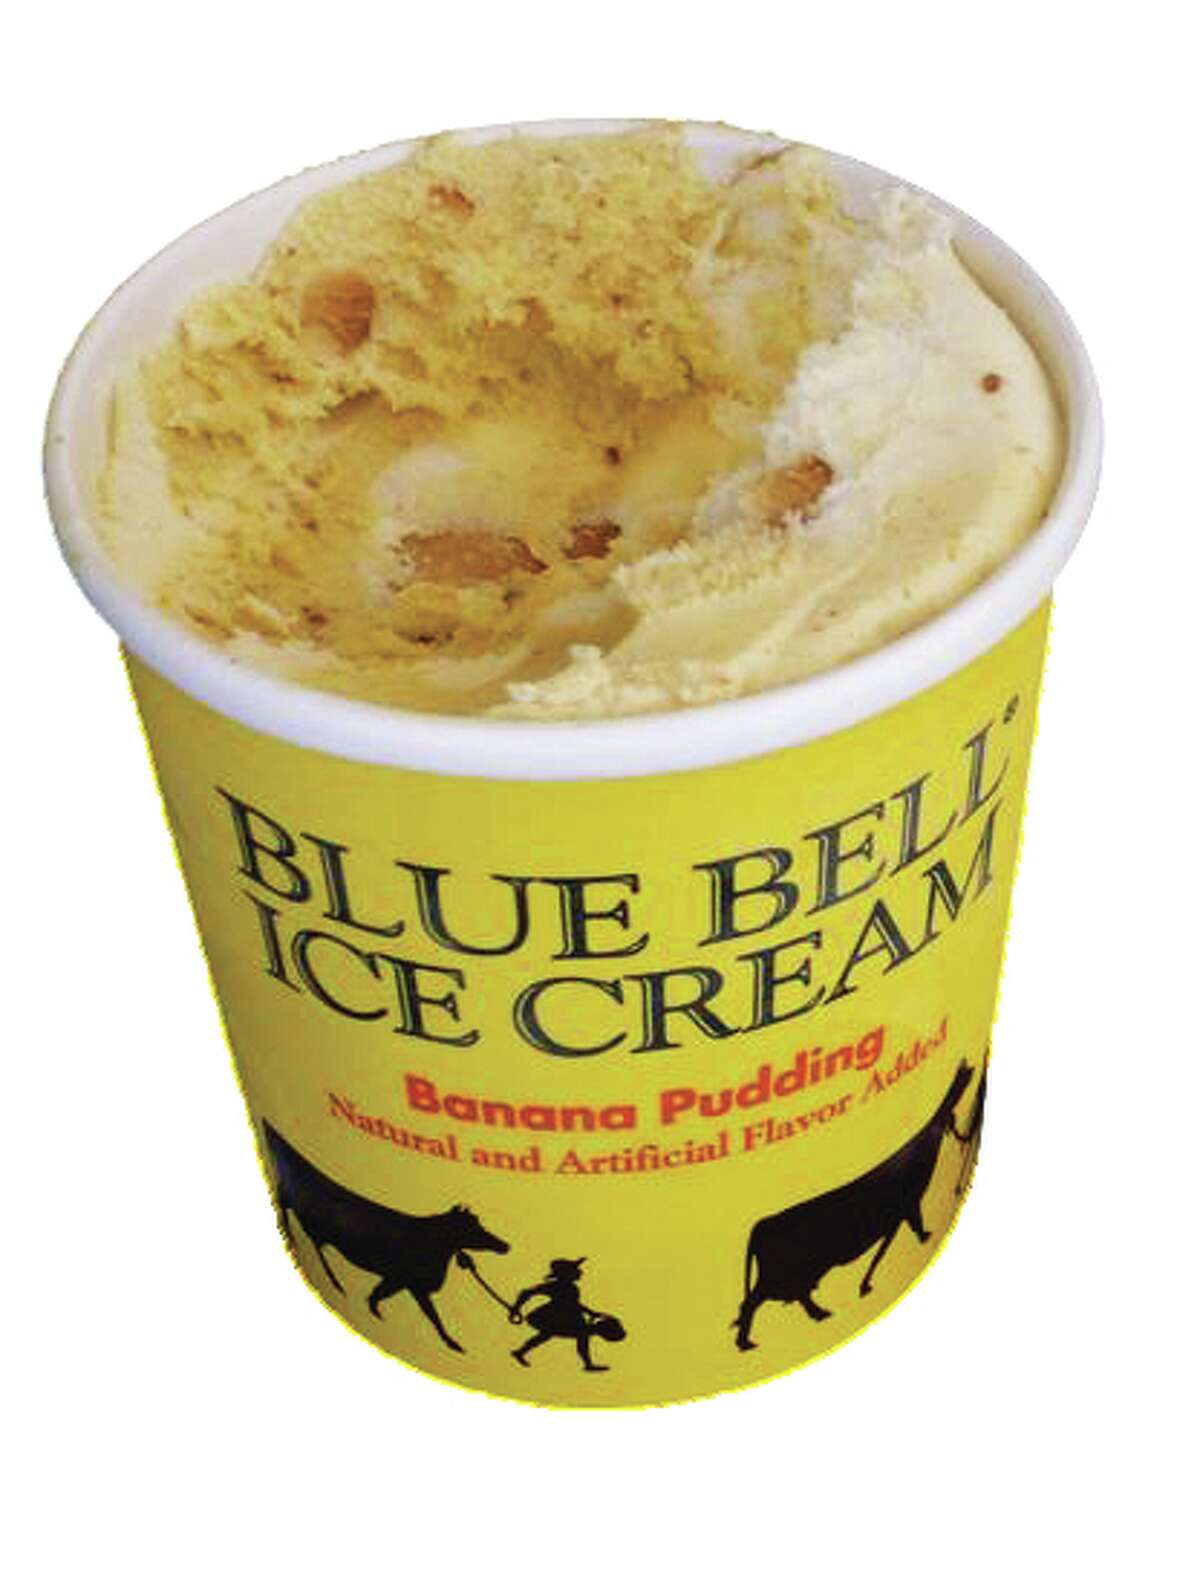 Blue Bell Banana Pudding Ice Cream.